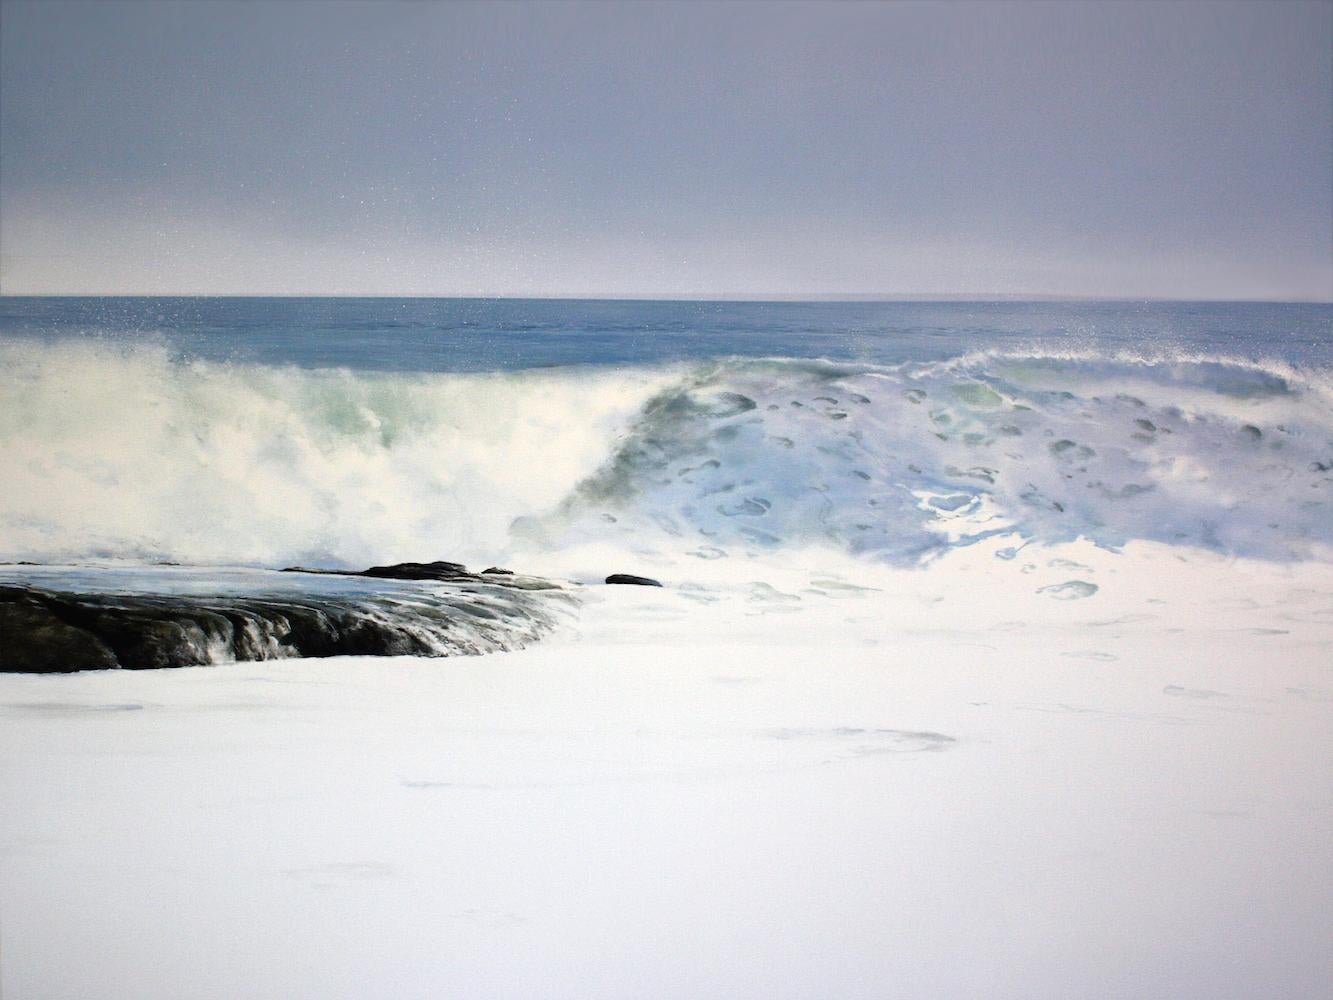 waves crashing on rocks painting